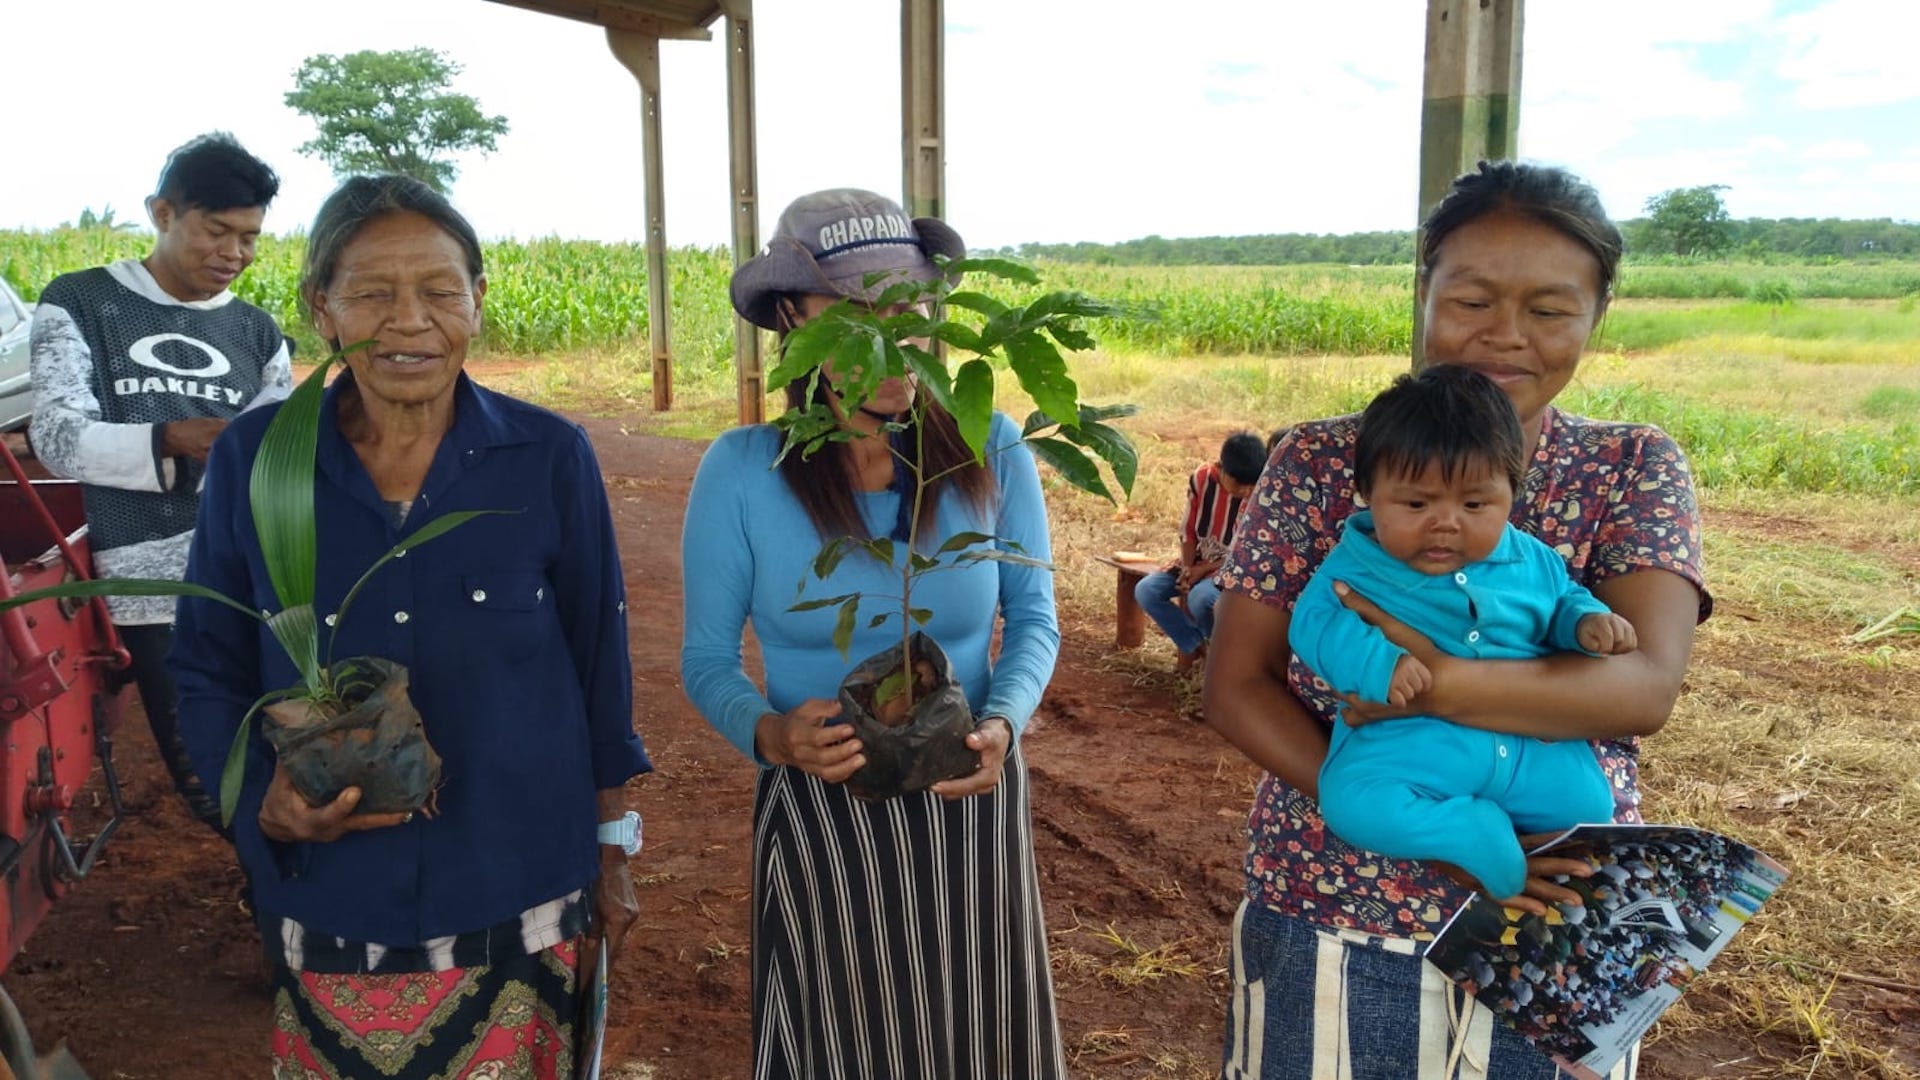 Three Indigenous people of the Guarani-Kaiowa peoples pose with saplings 